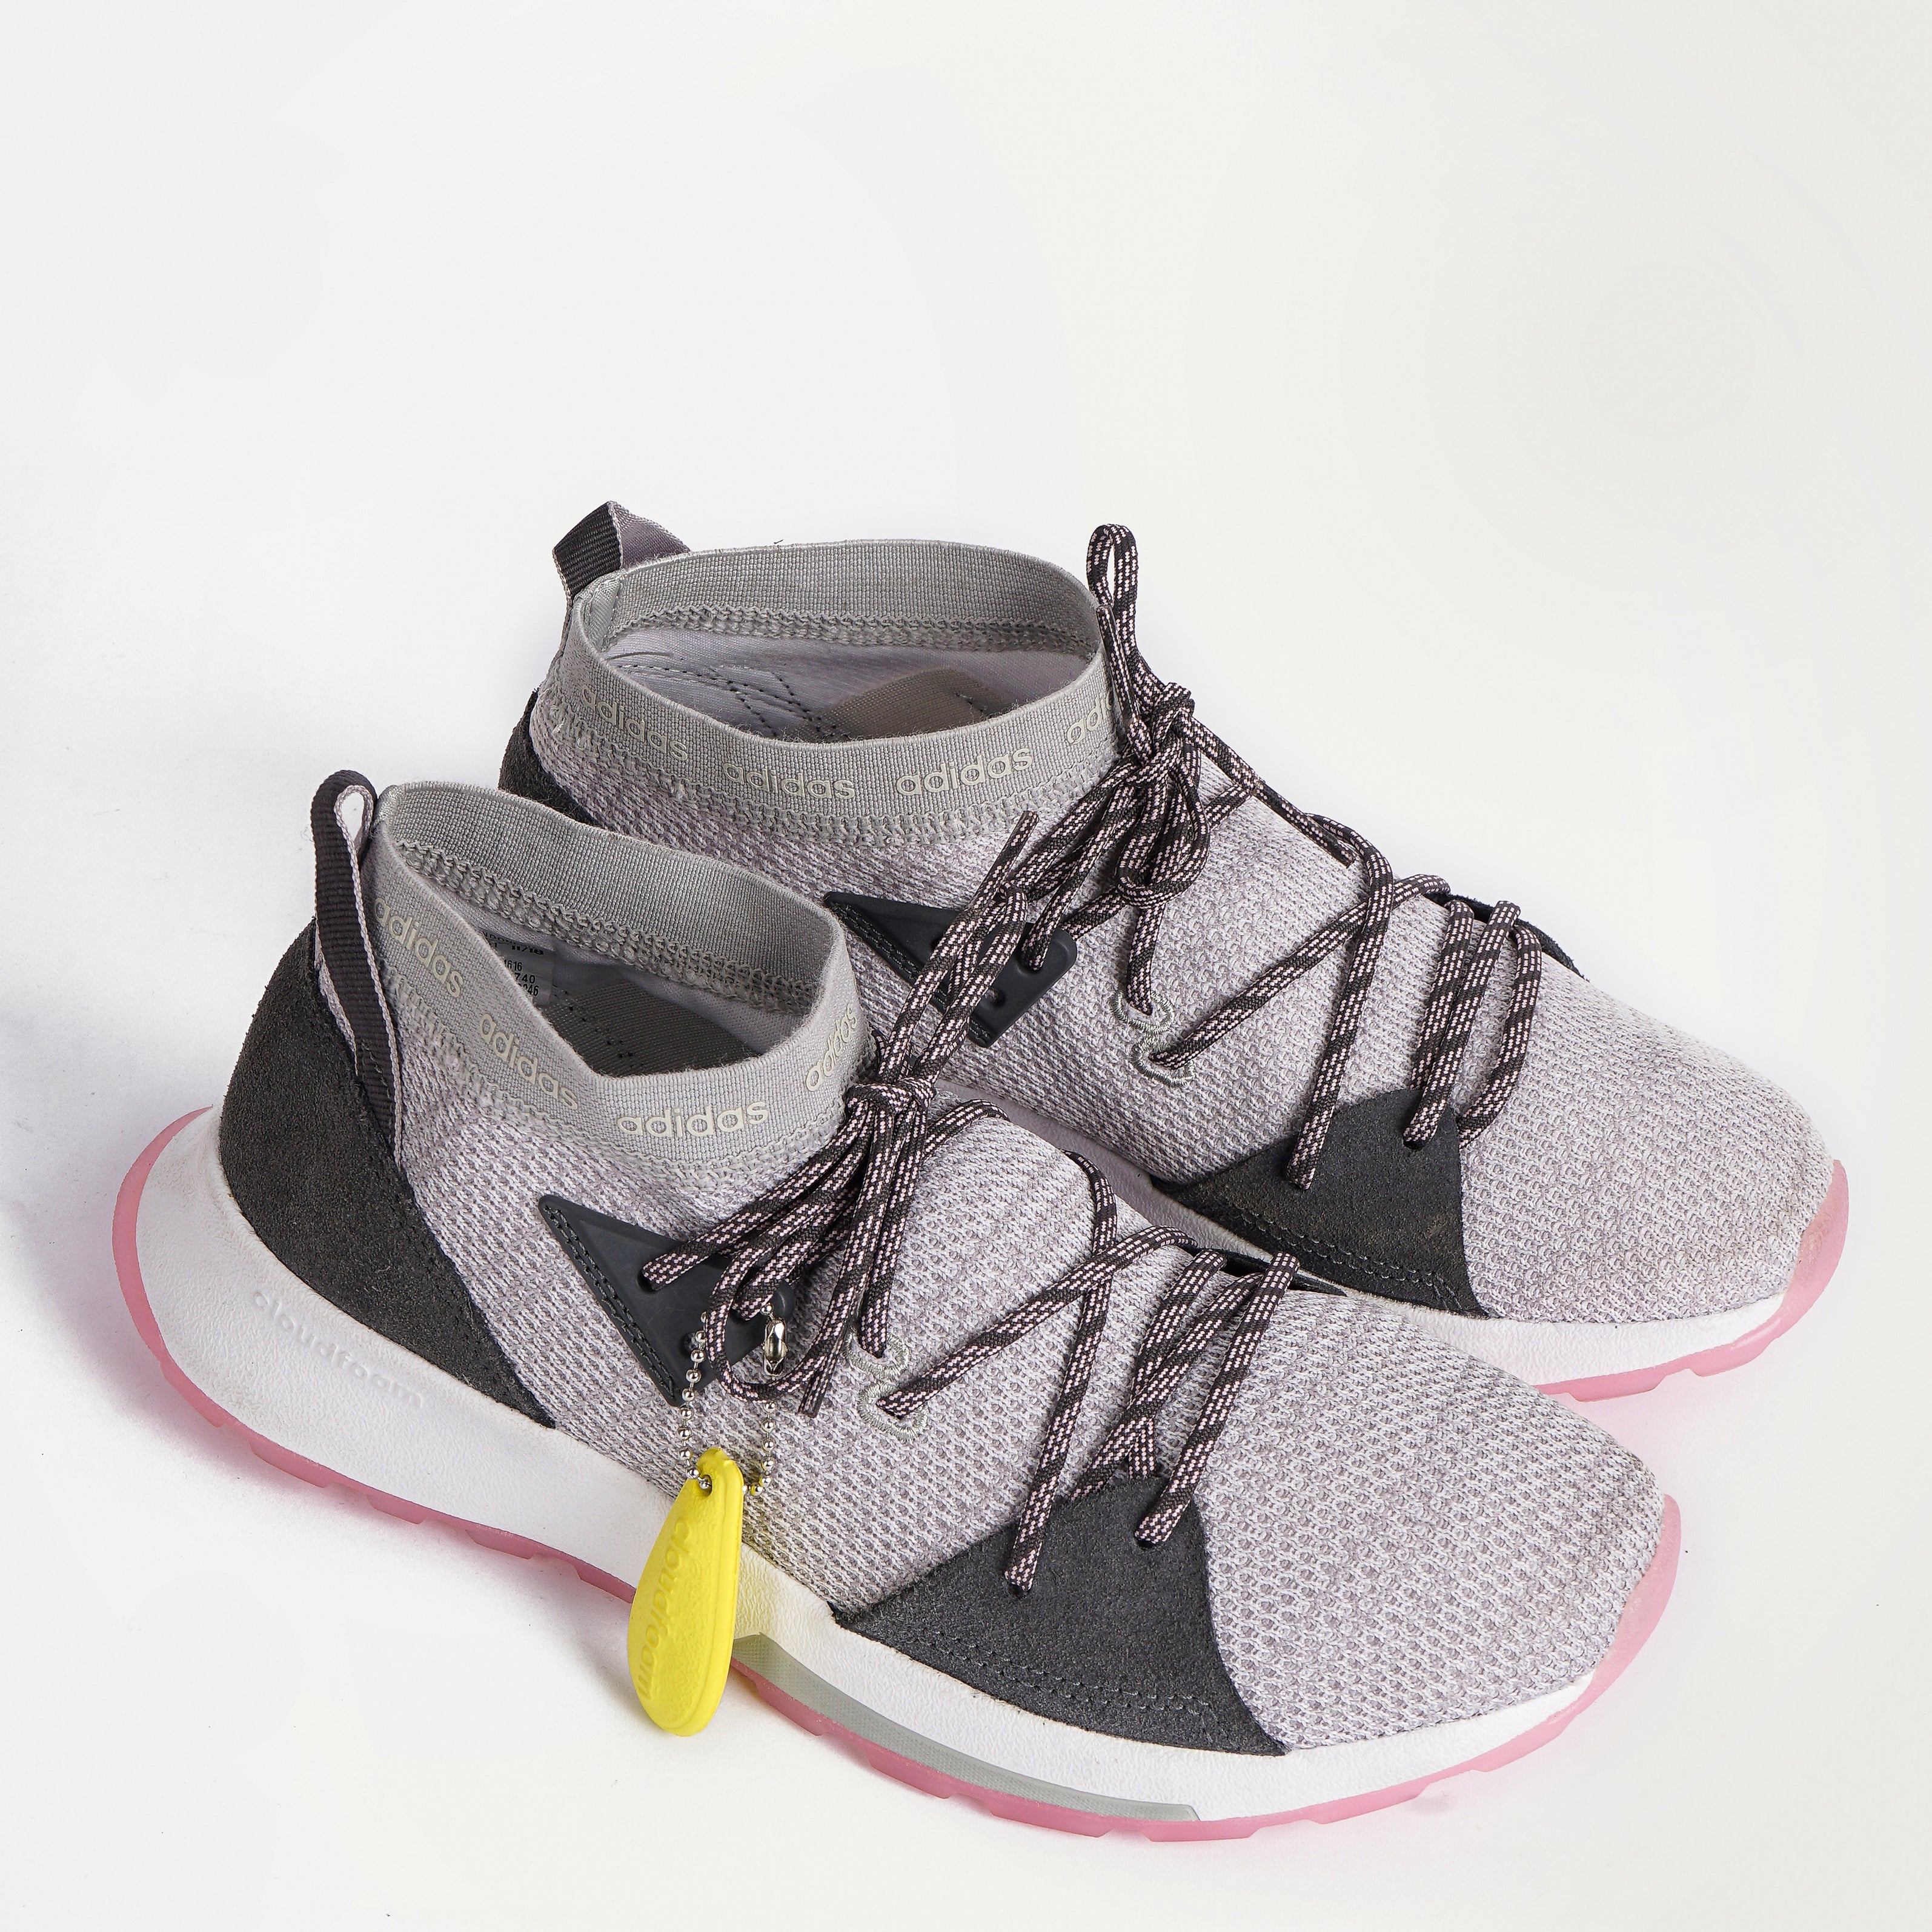 Original Adidas Quesa - Women's Running Shoes - Marca Deals - Adidas